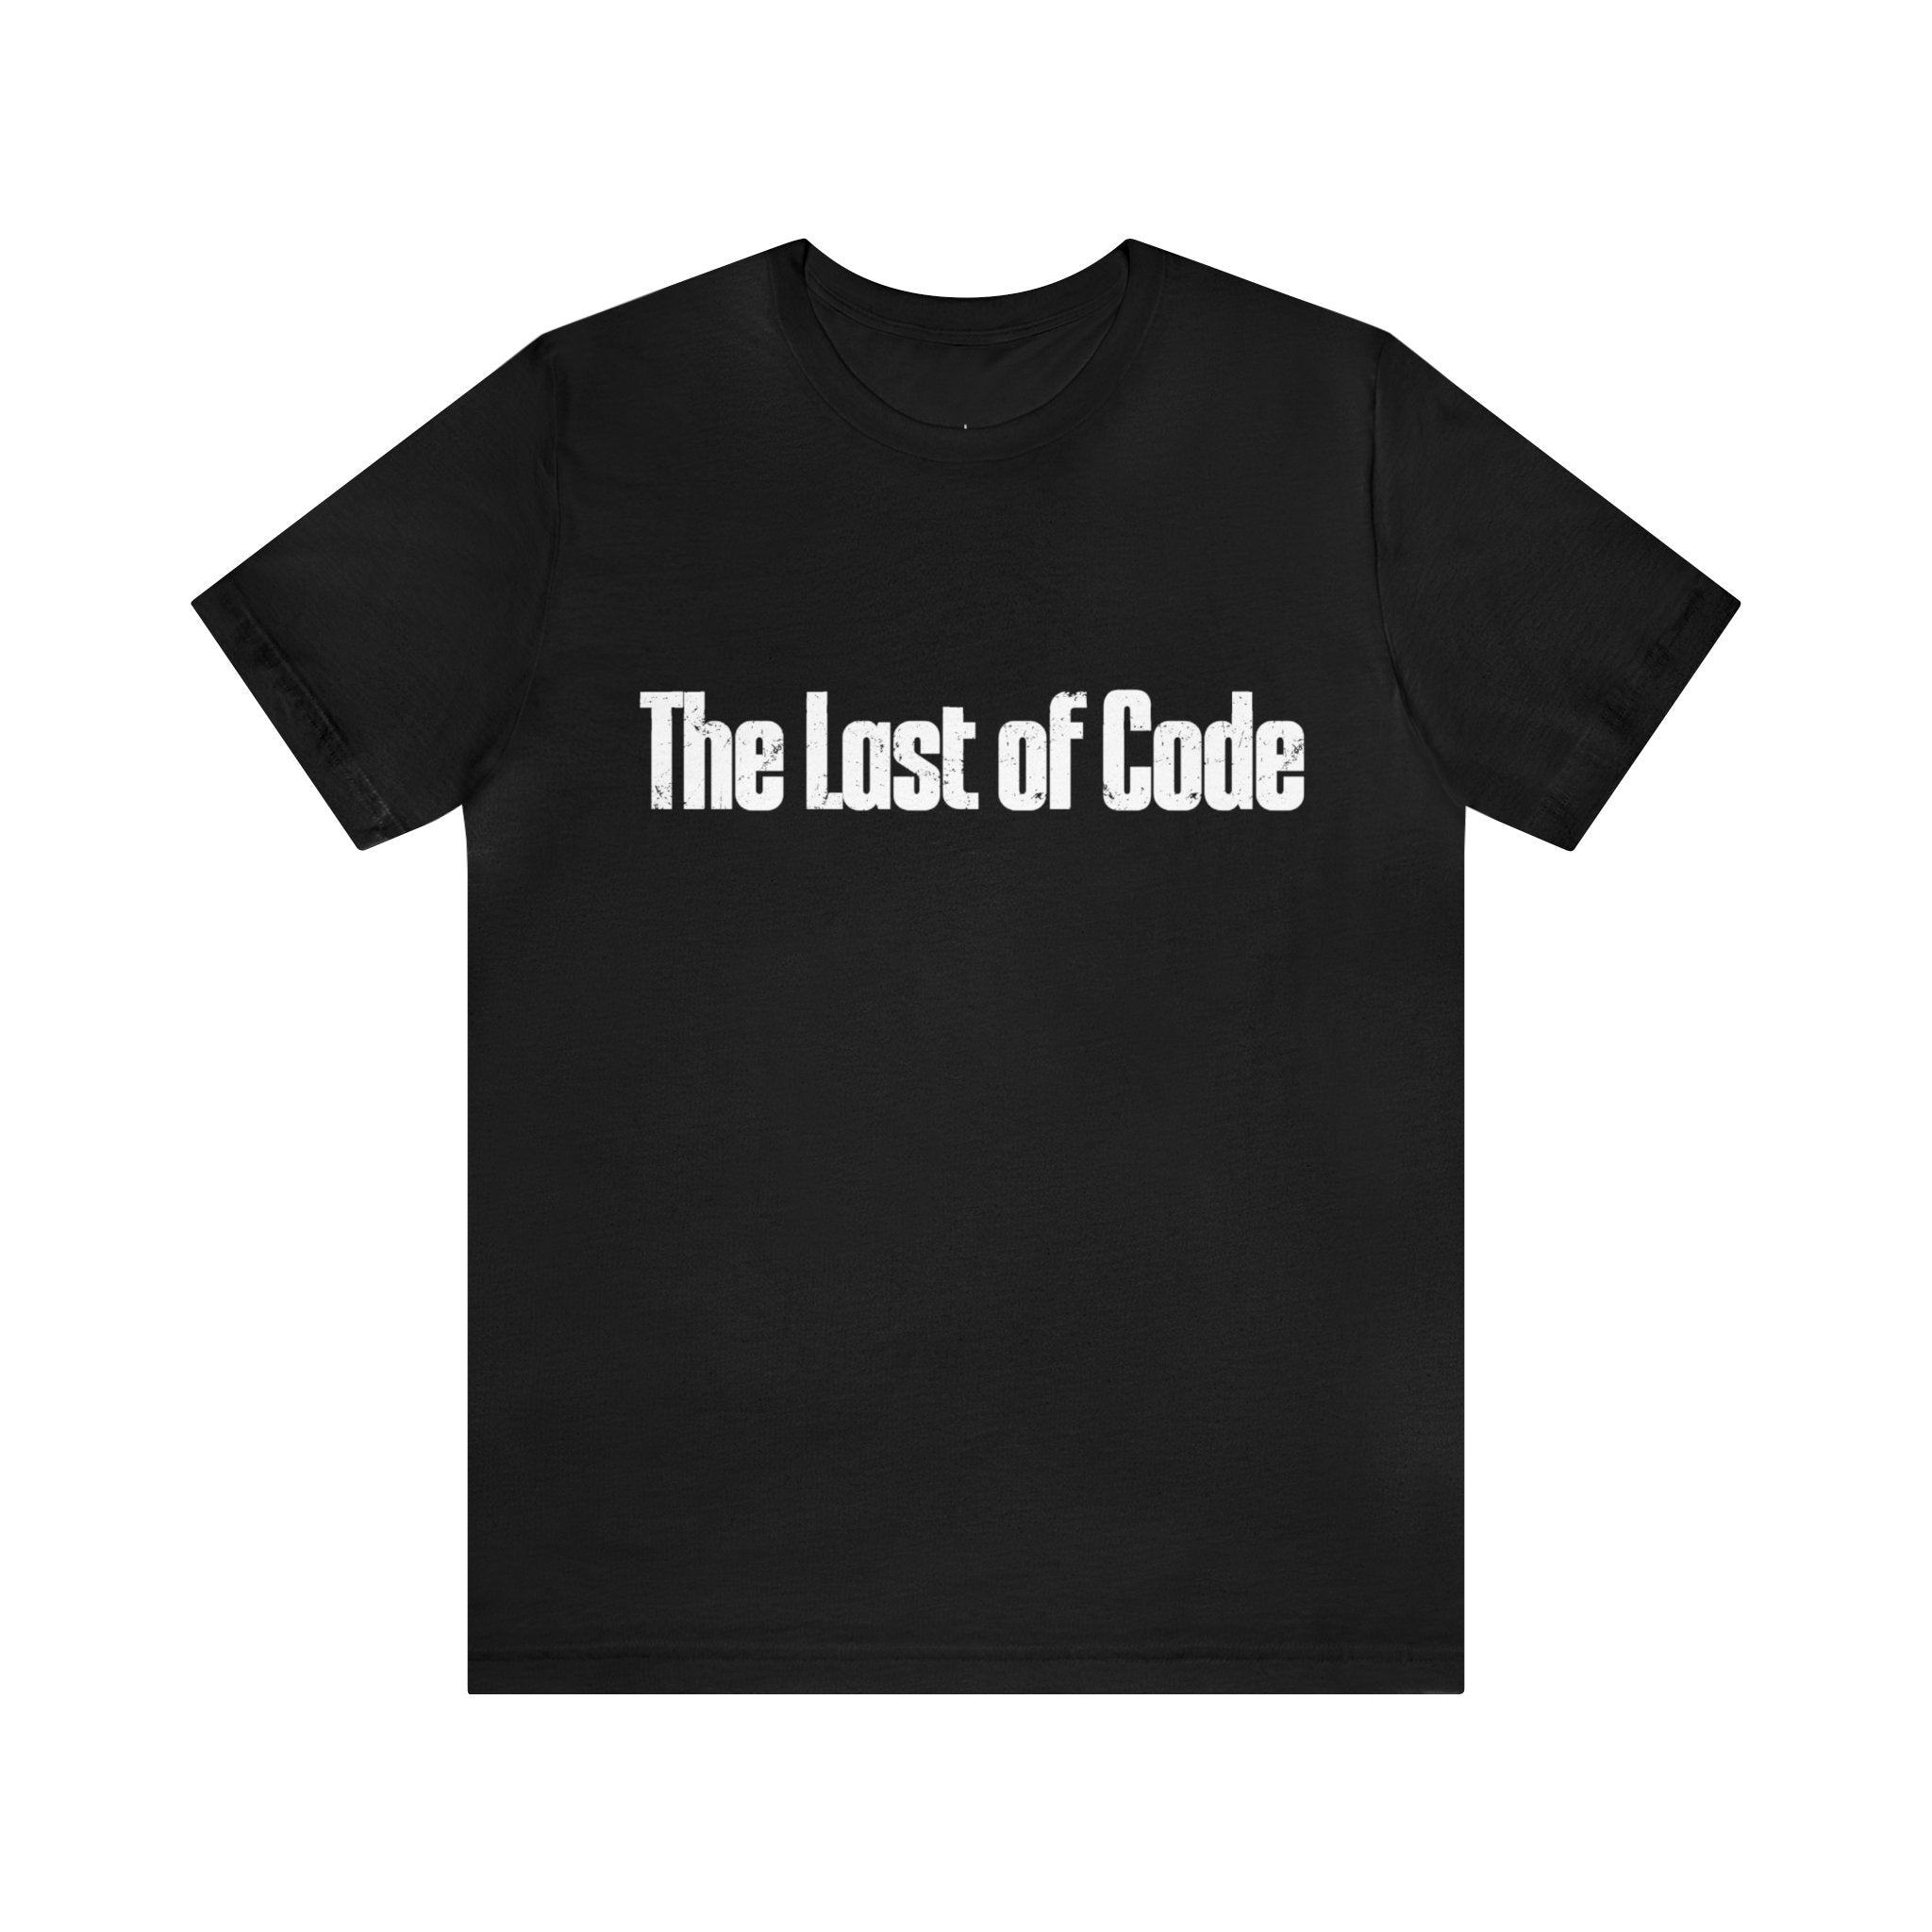 The Last of Code Tee Shirt